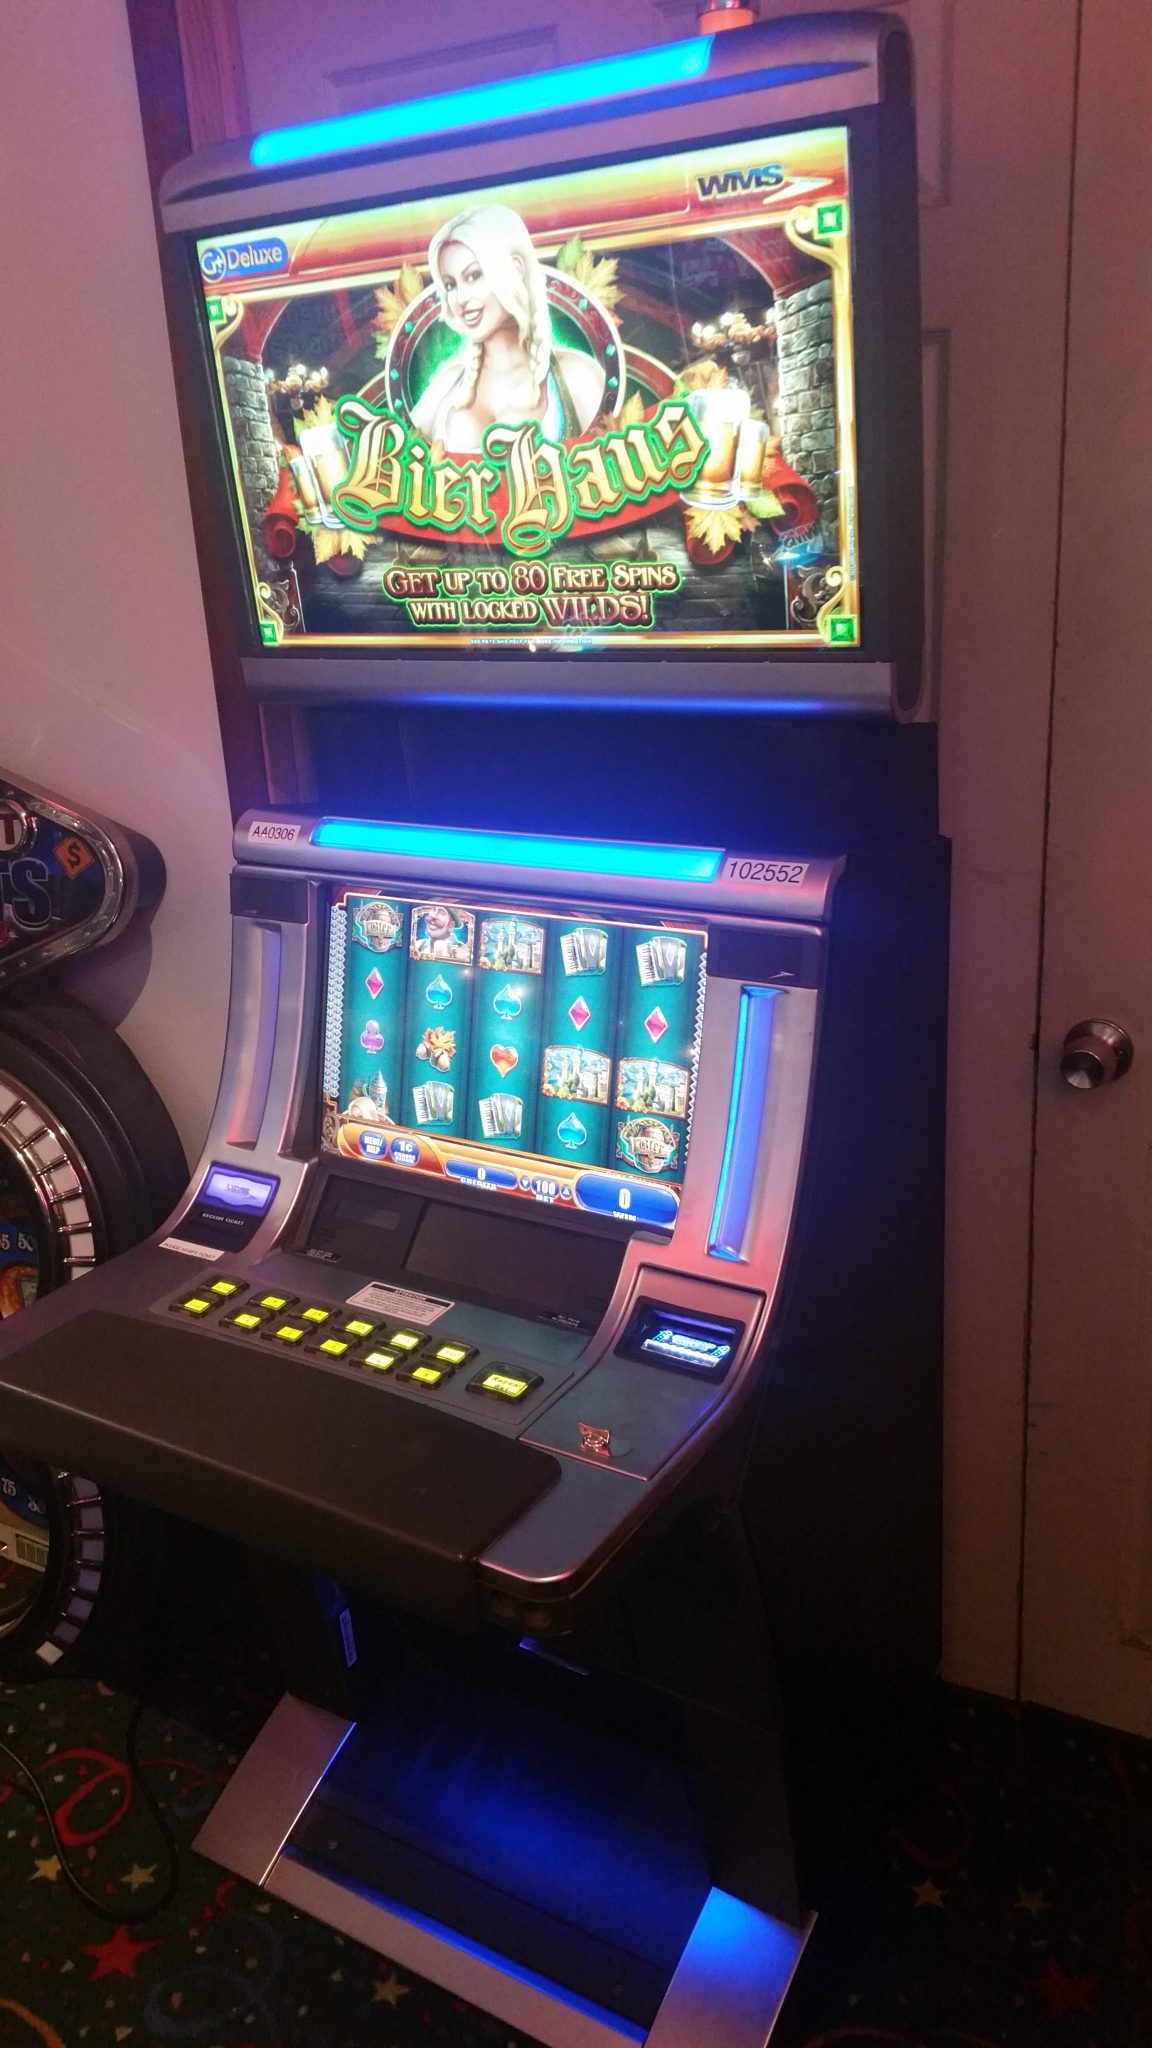 Huff and puff slot machine near me